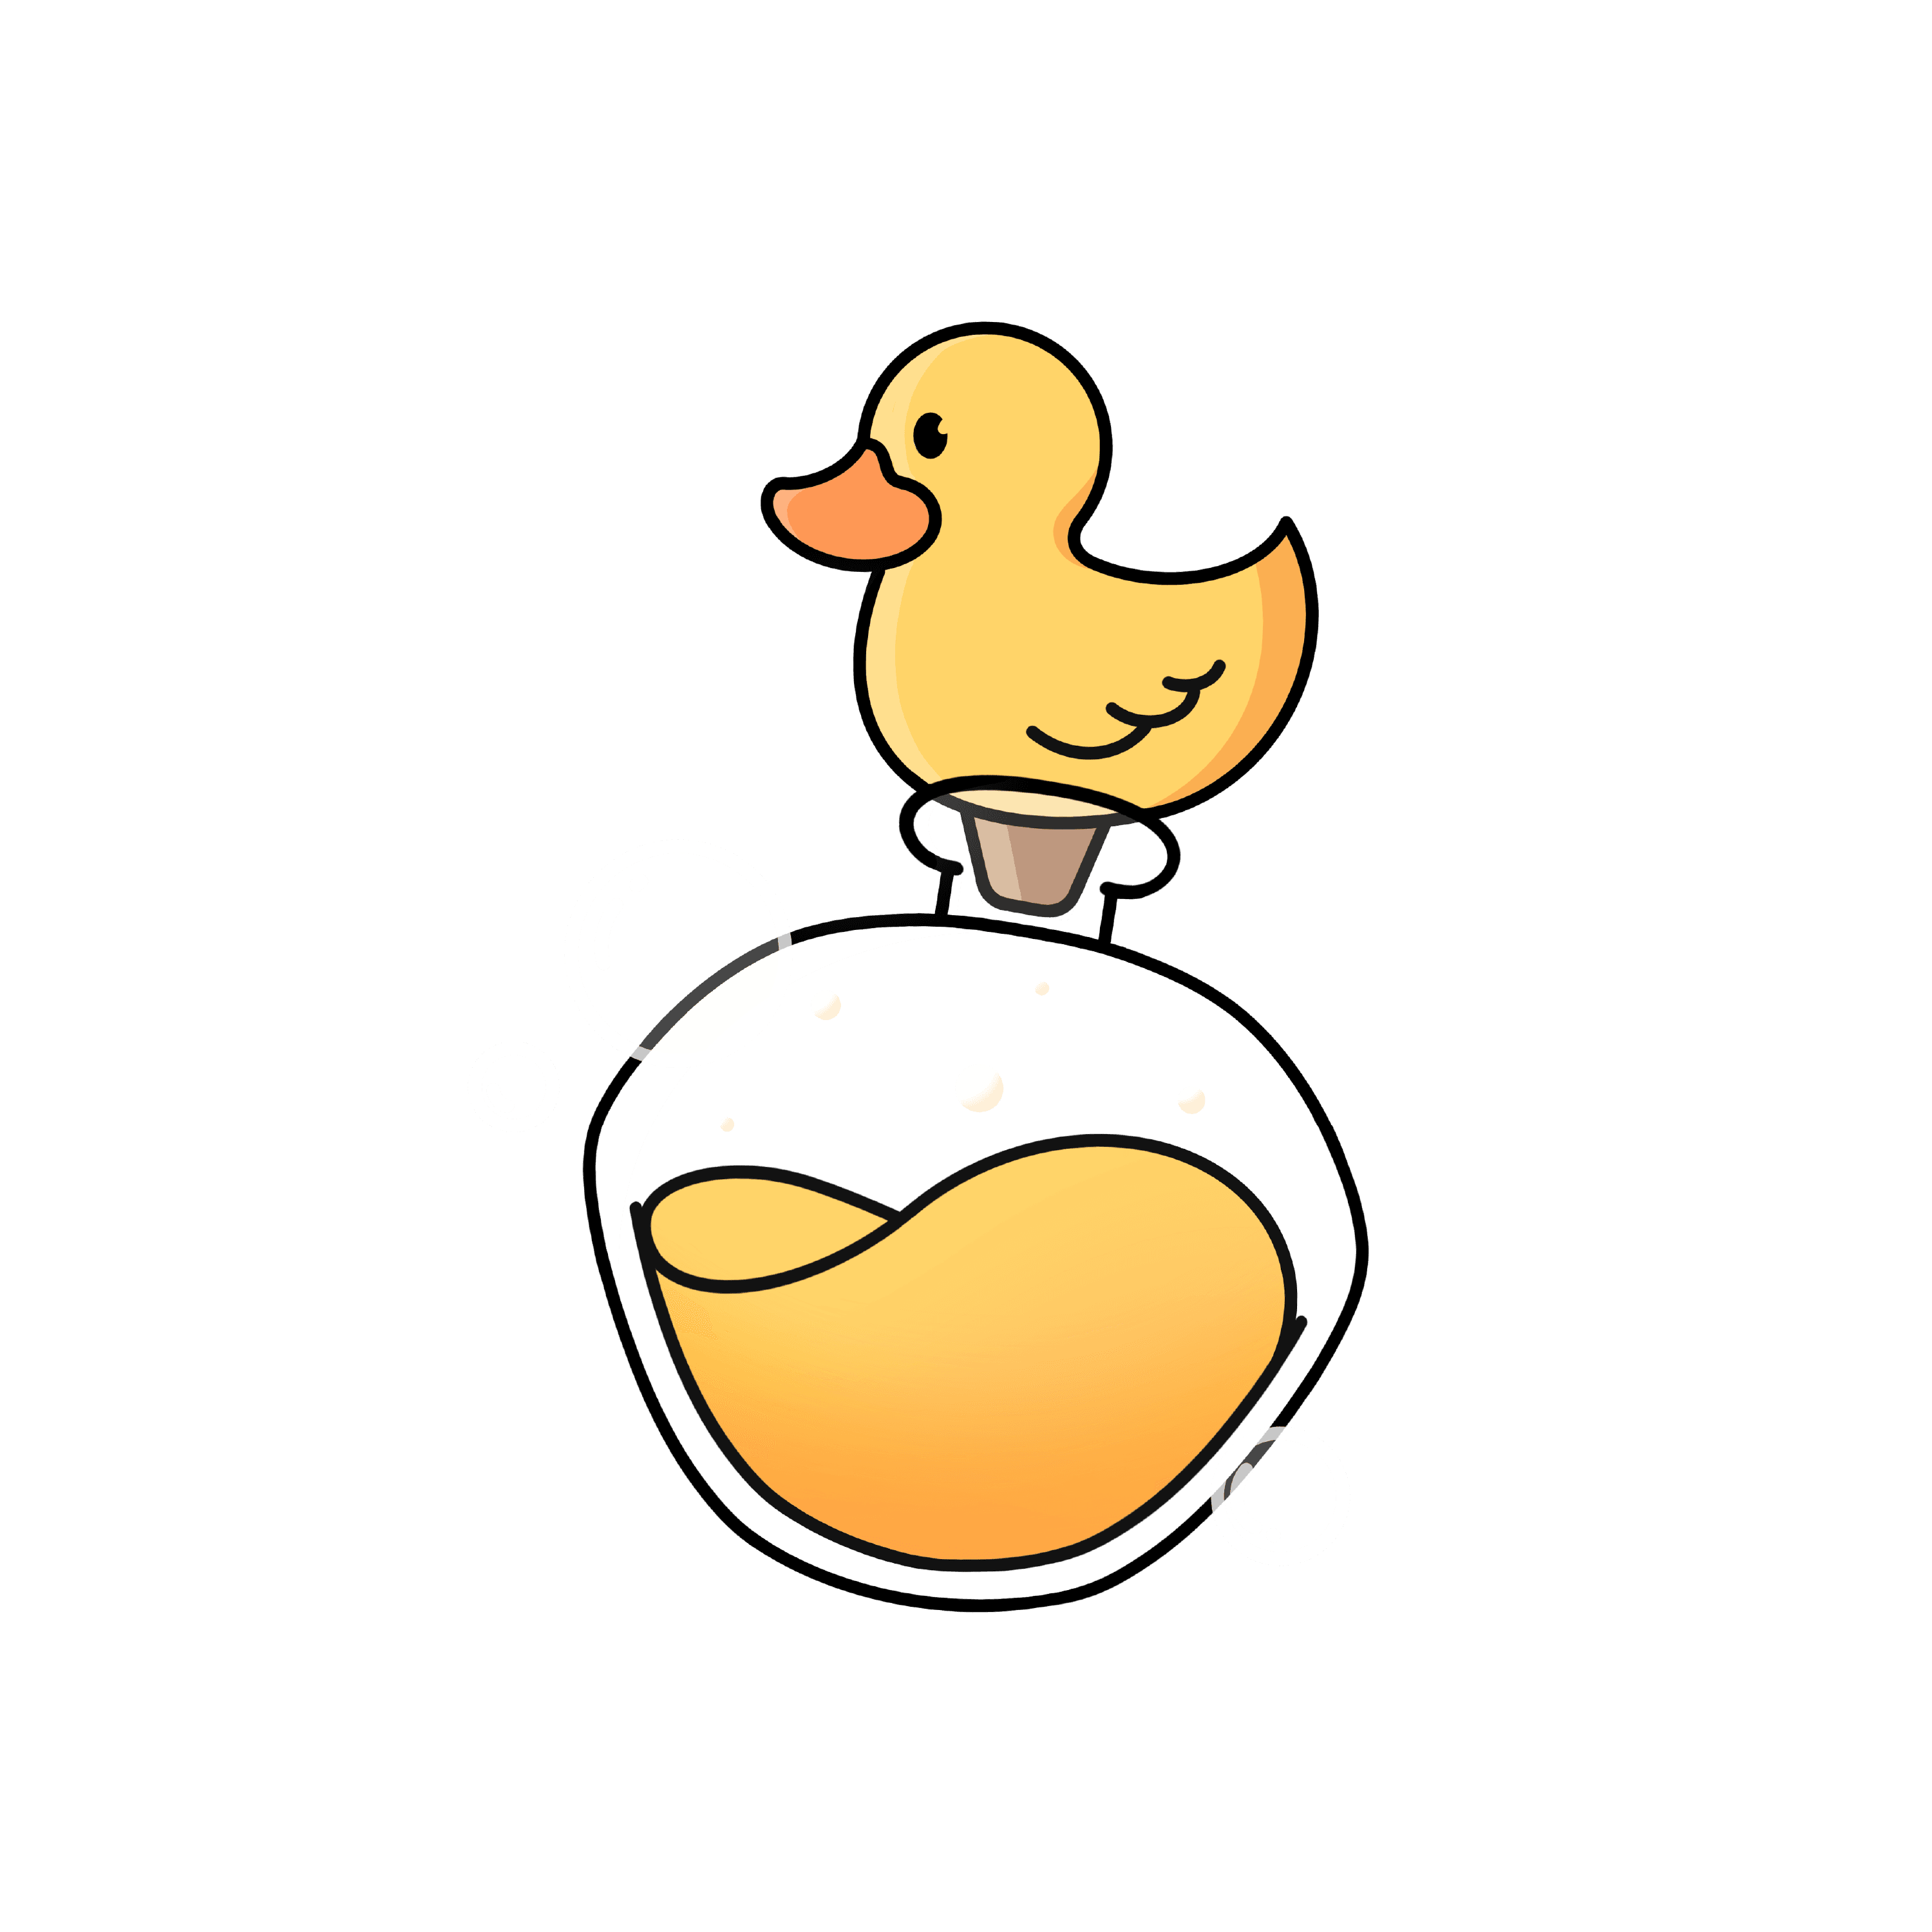 1-UP Potion (Ducks)